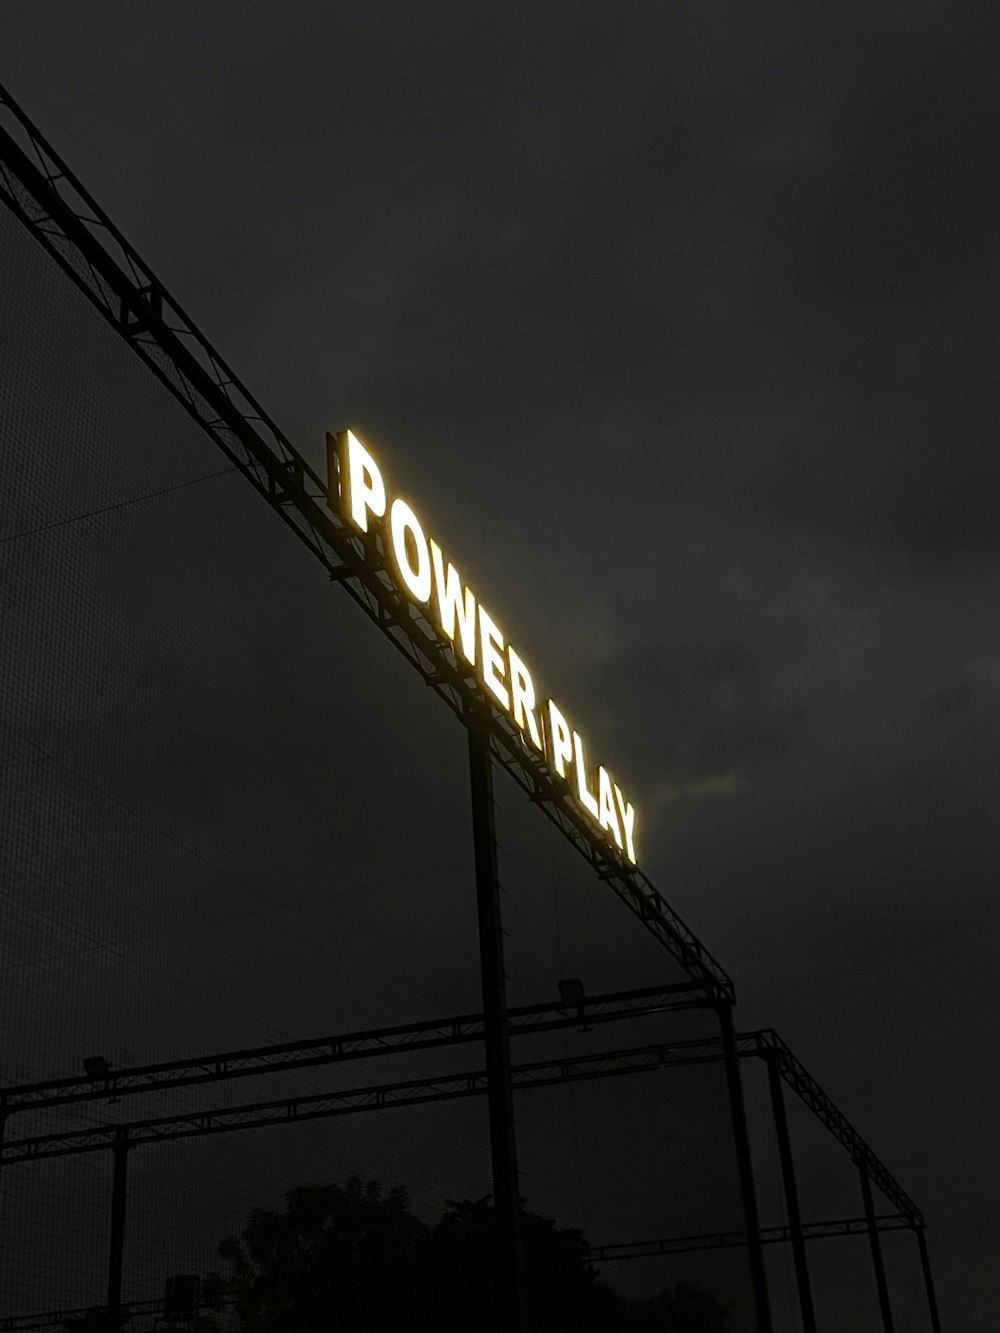 a power play sign lit up against a dark sky